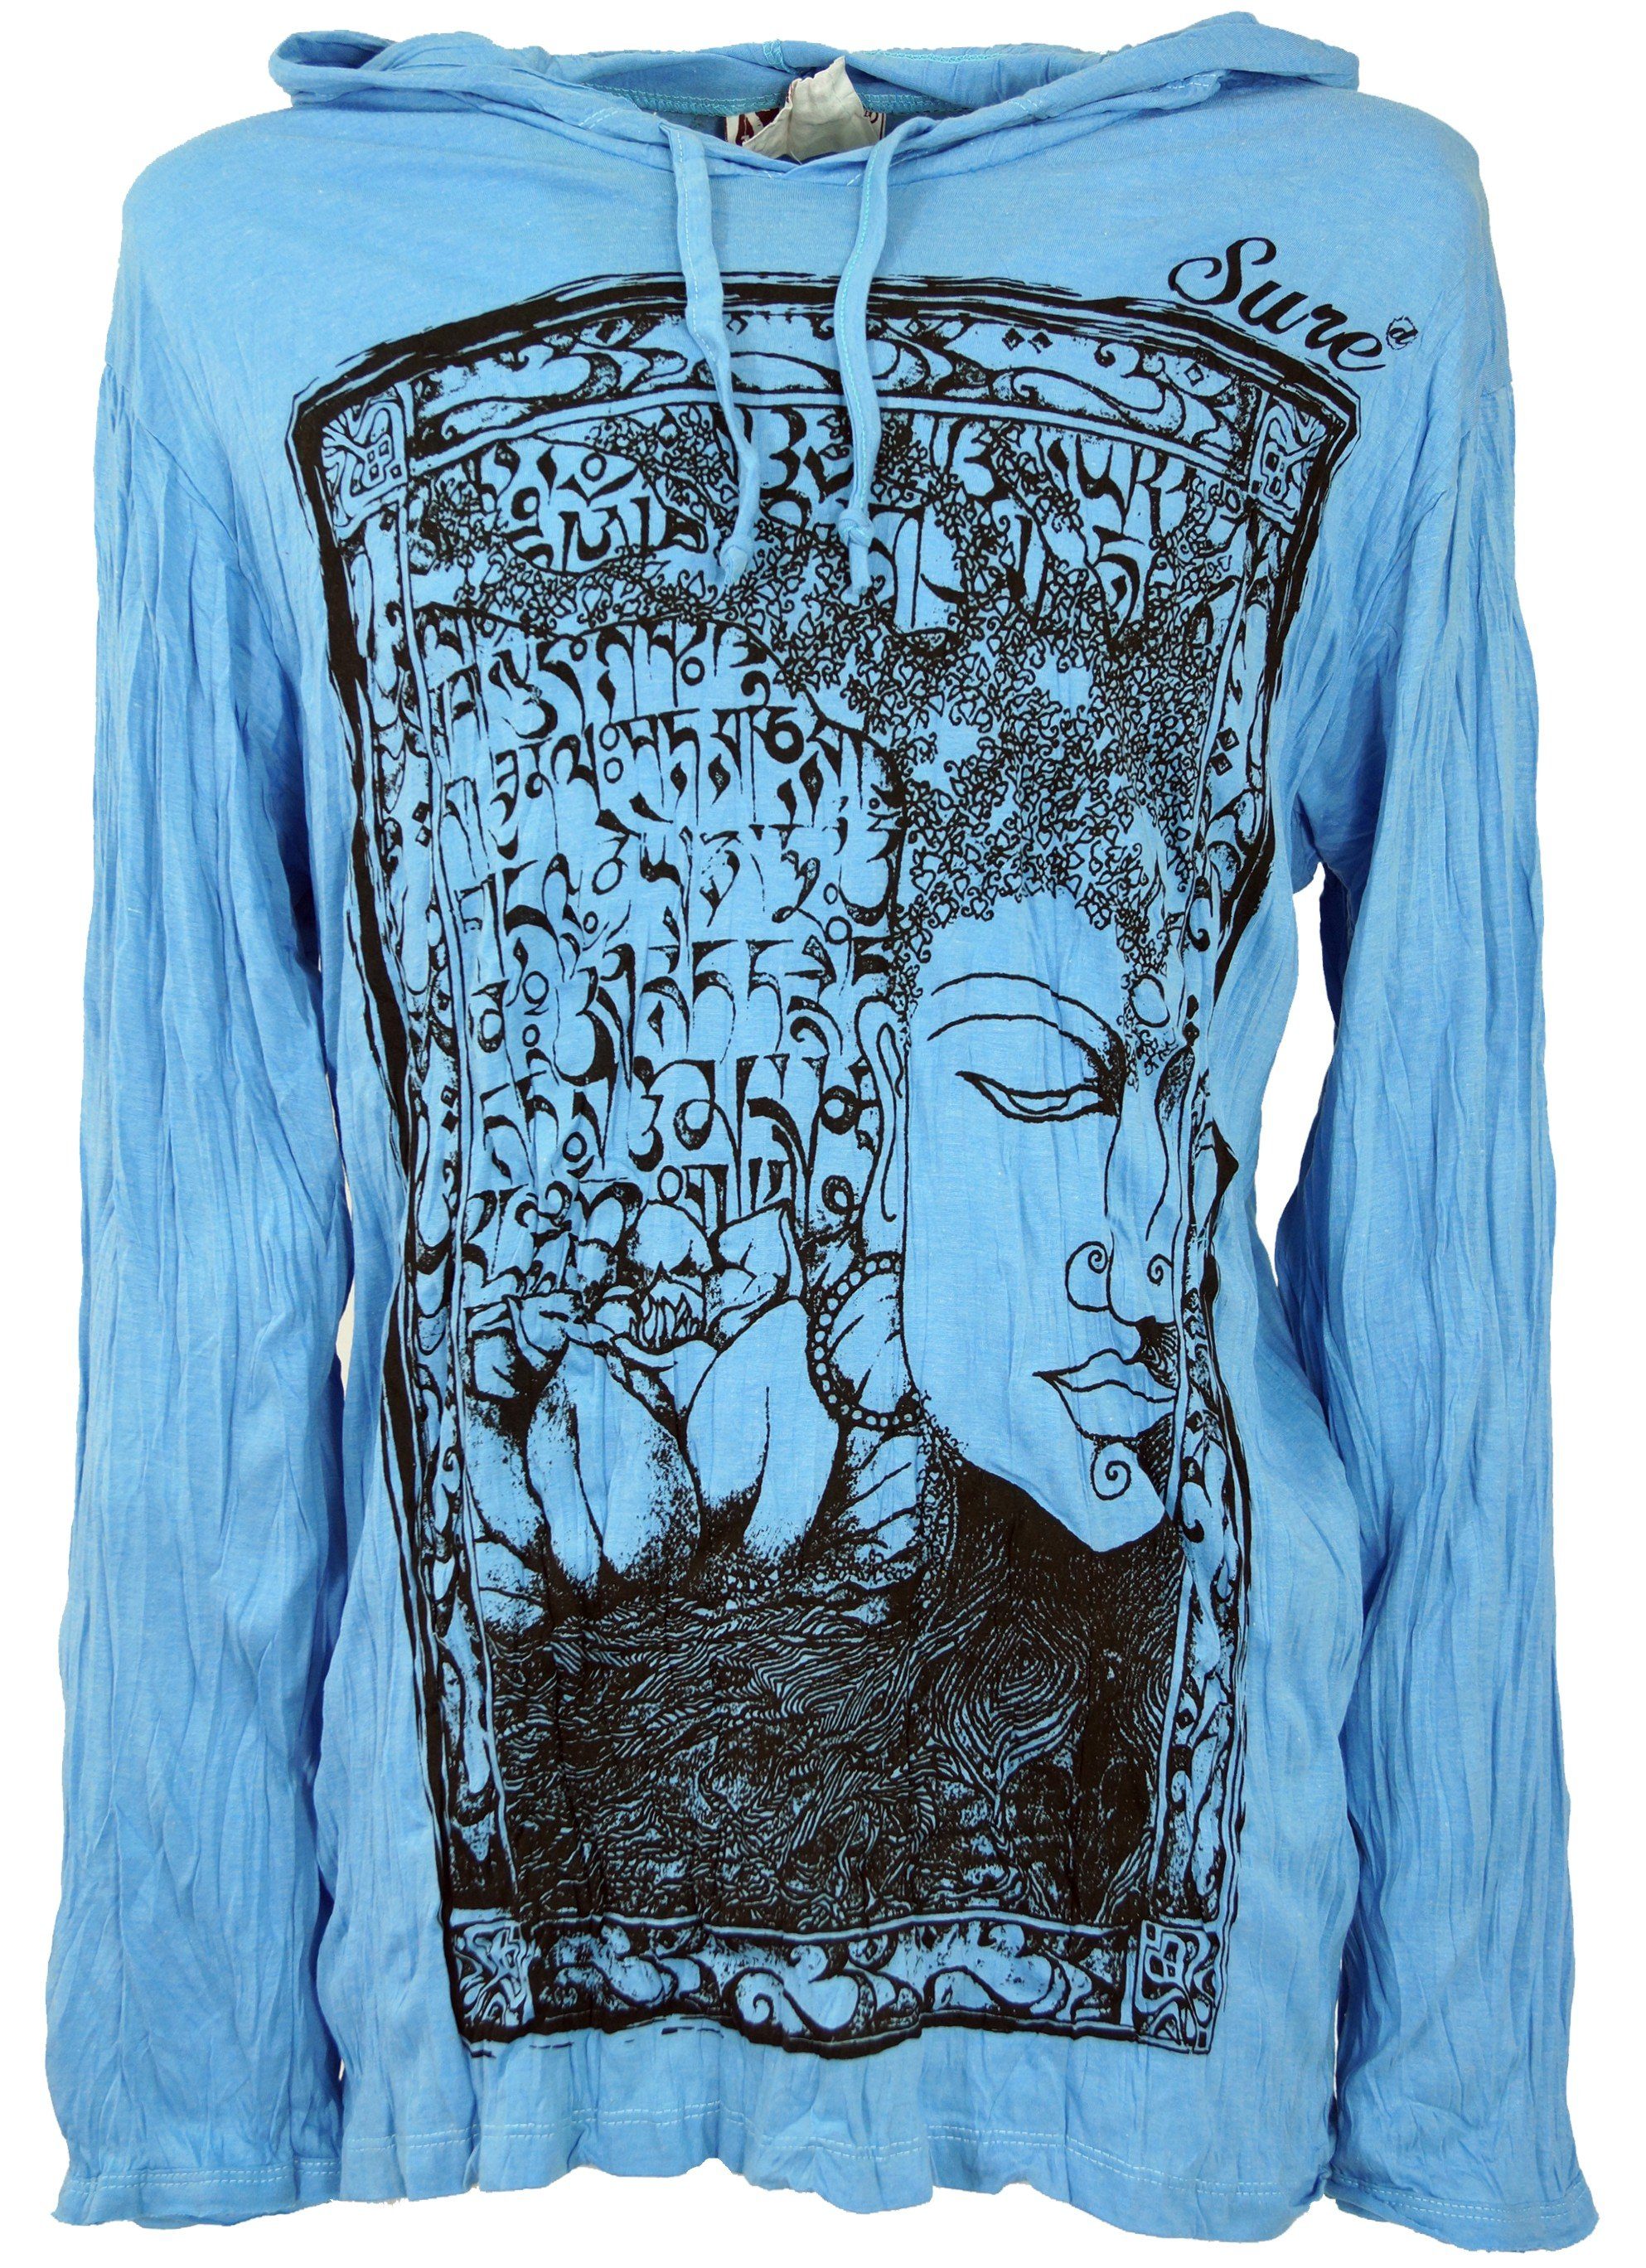 Guru-Shop T-Shirt Sure Langarmshirt, Kapuzenshirt Mantra Buddha -.. Goa Style, Festival, alternative Bekleidung hellblau